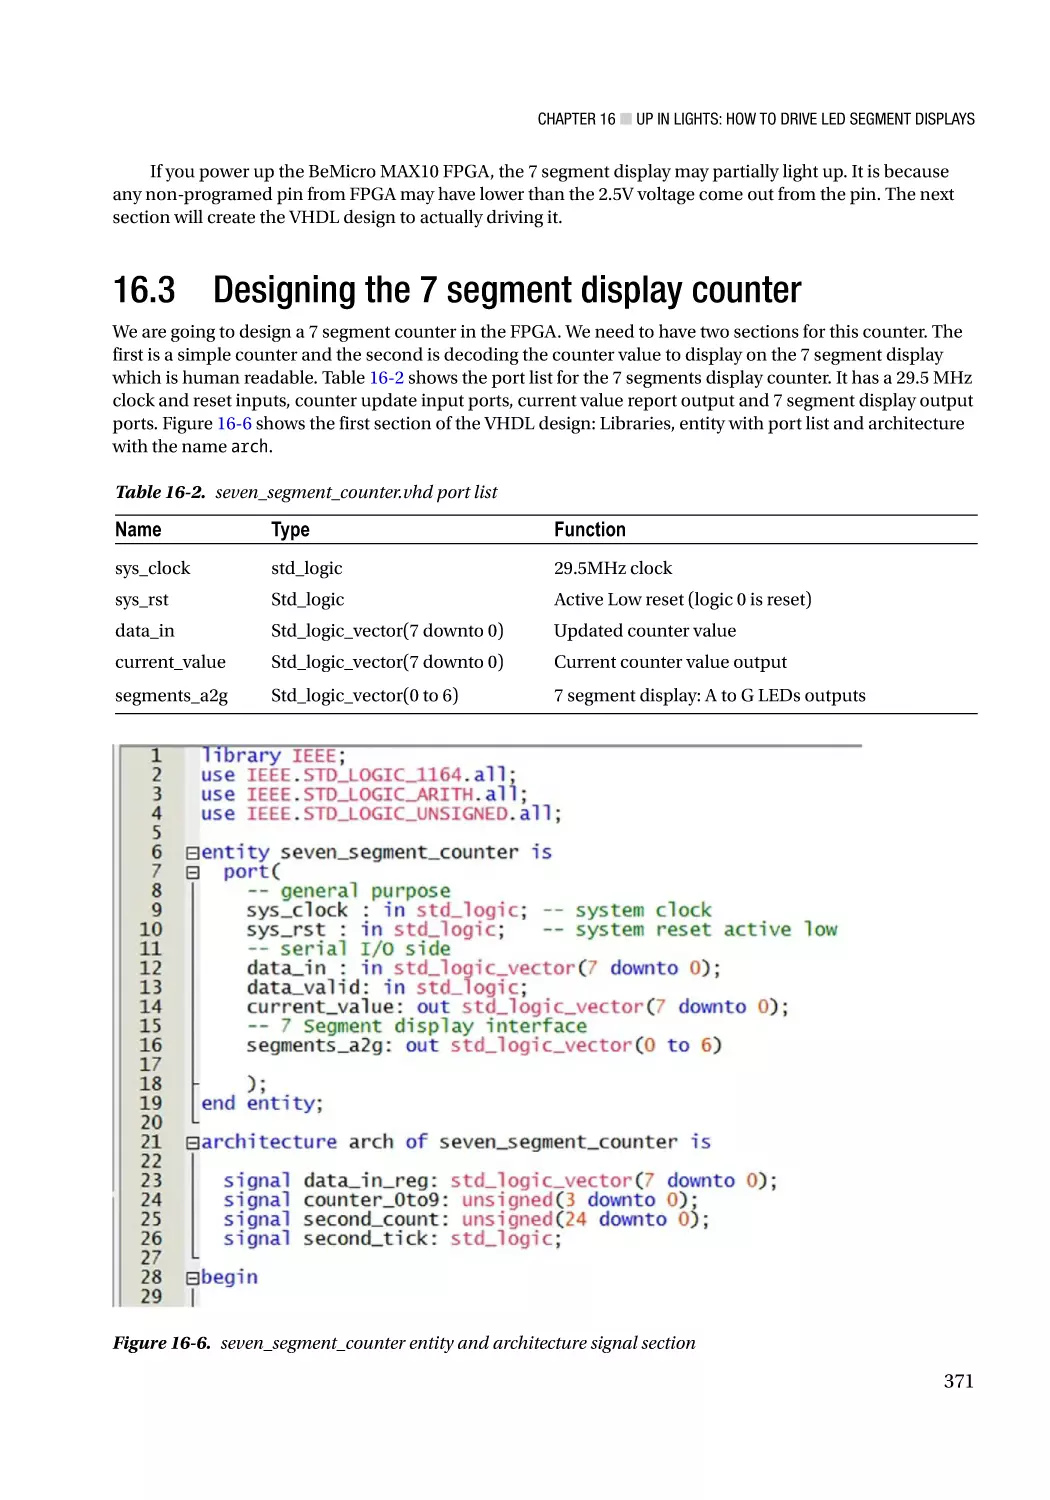 16.3 Designing the 7 segment display counter